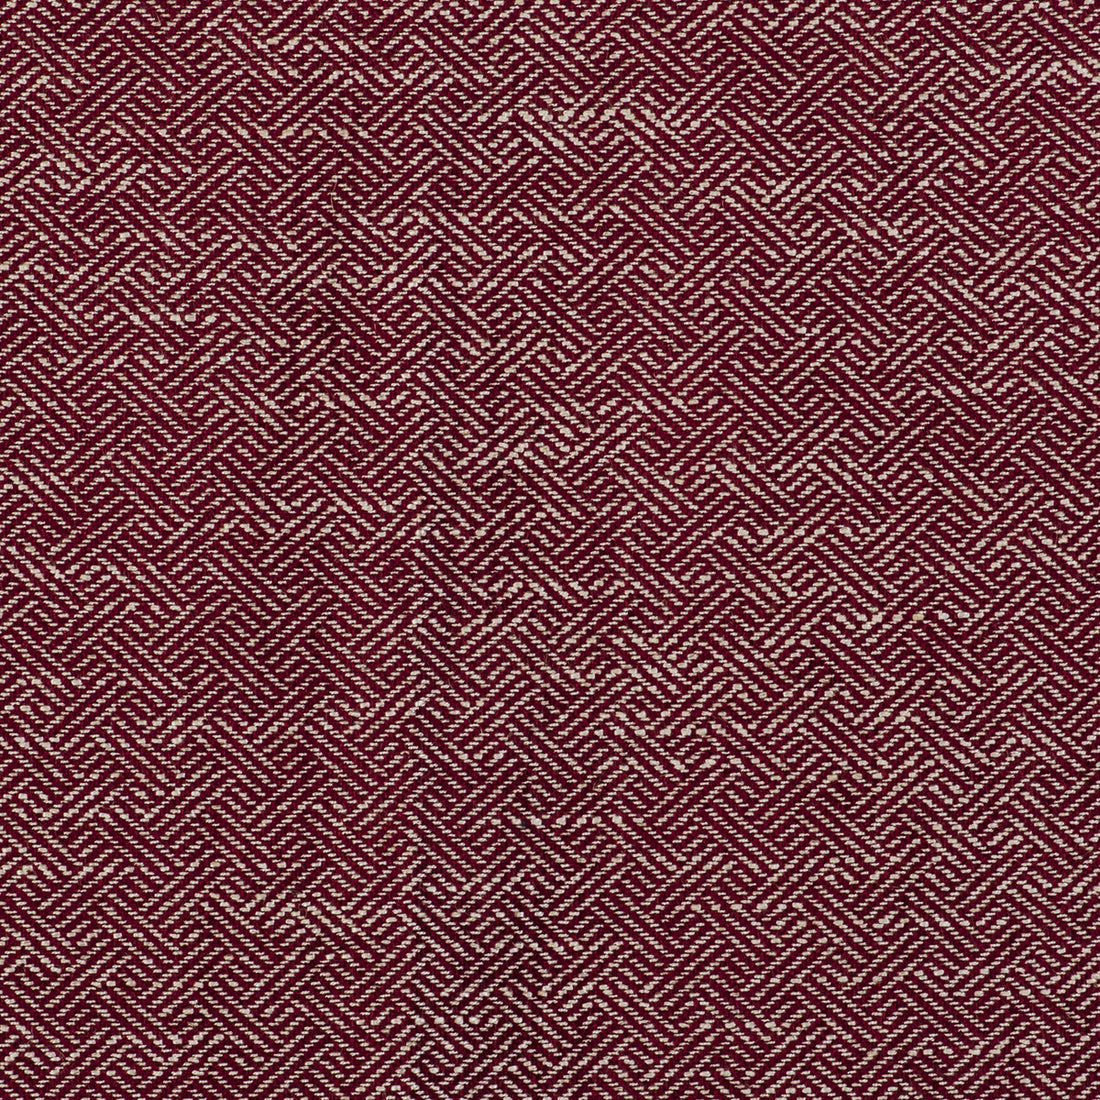 Enea fabric in rojo color - pattern GDT5518.014.0 - by Gaston y Daniela in the Gaston Libreria collection